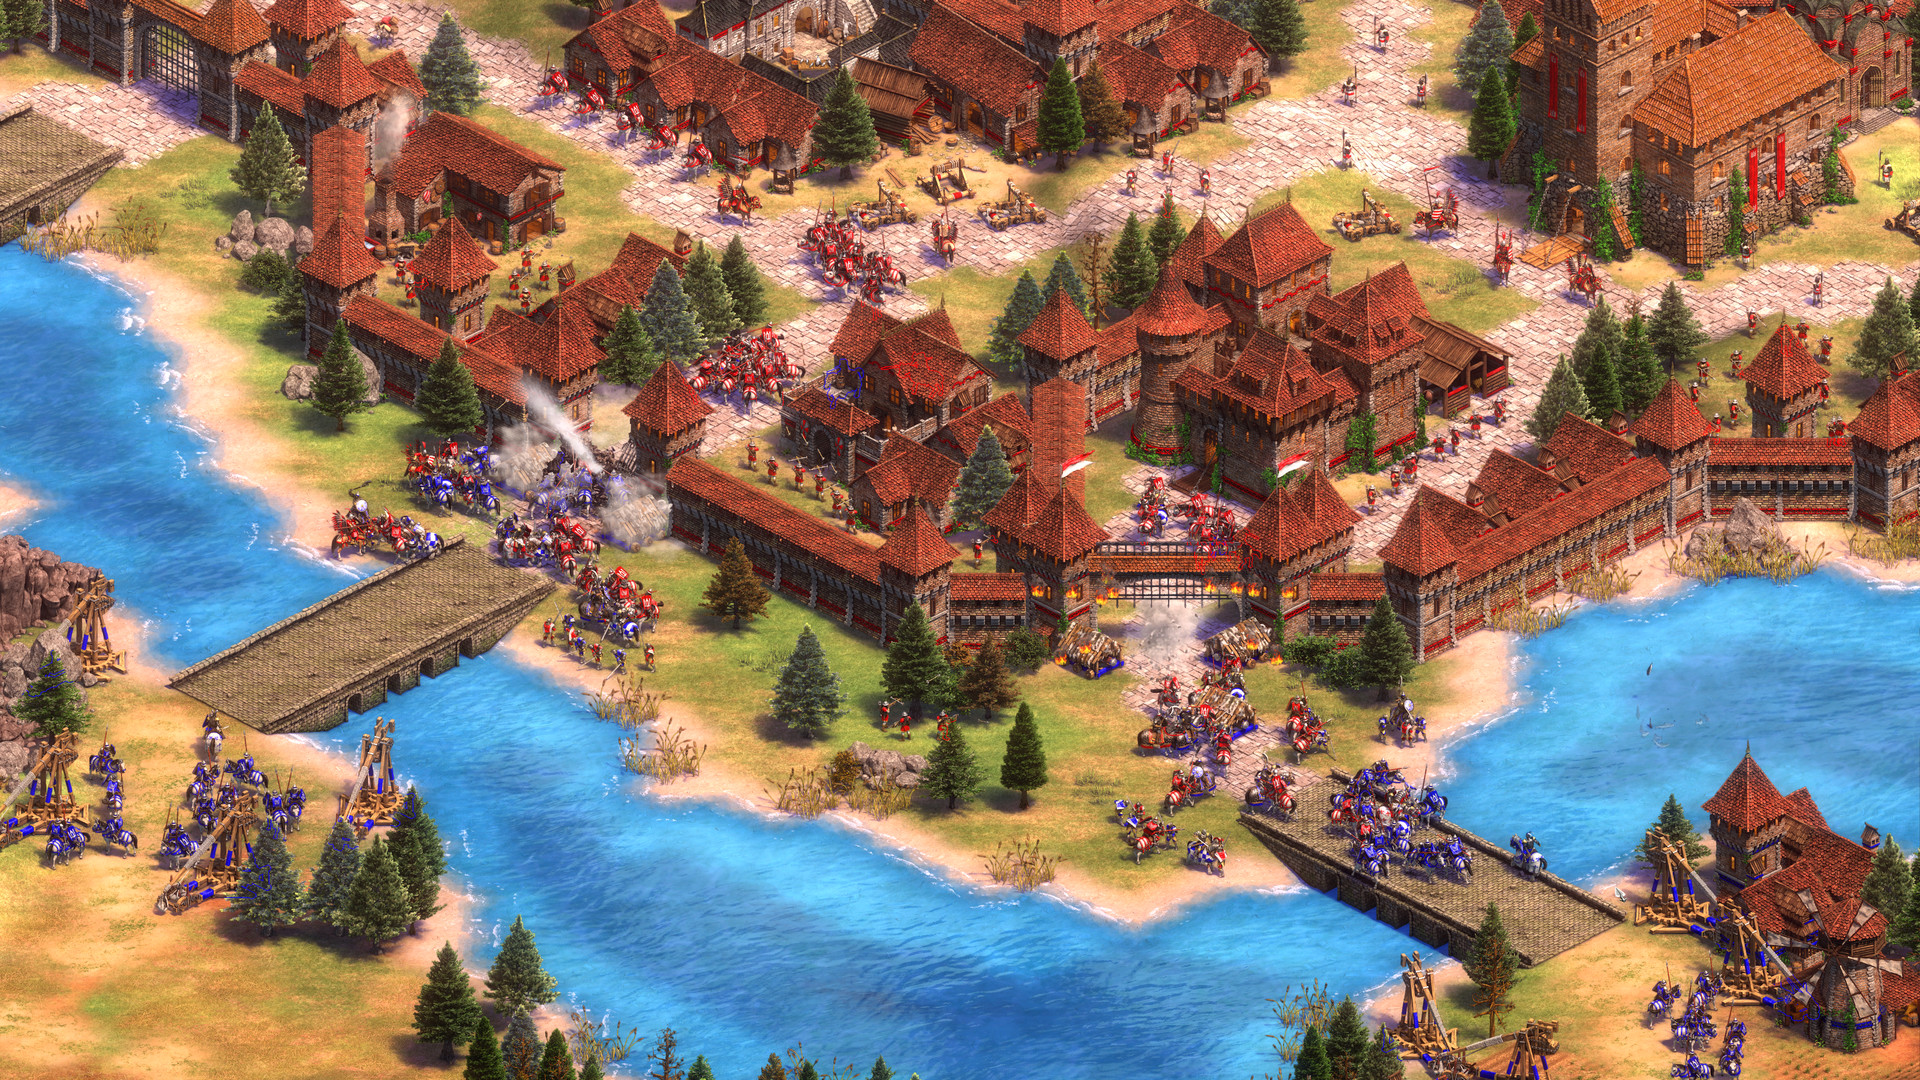 Age of Empires 2: DE No multiplayer option - Microsoft Community